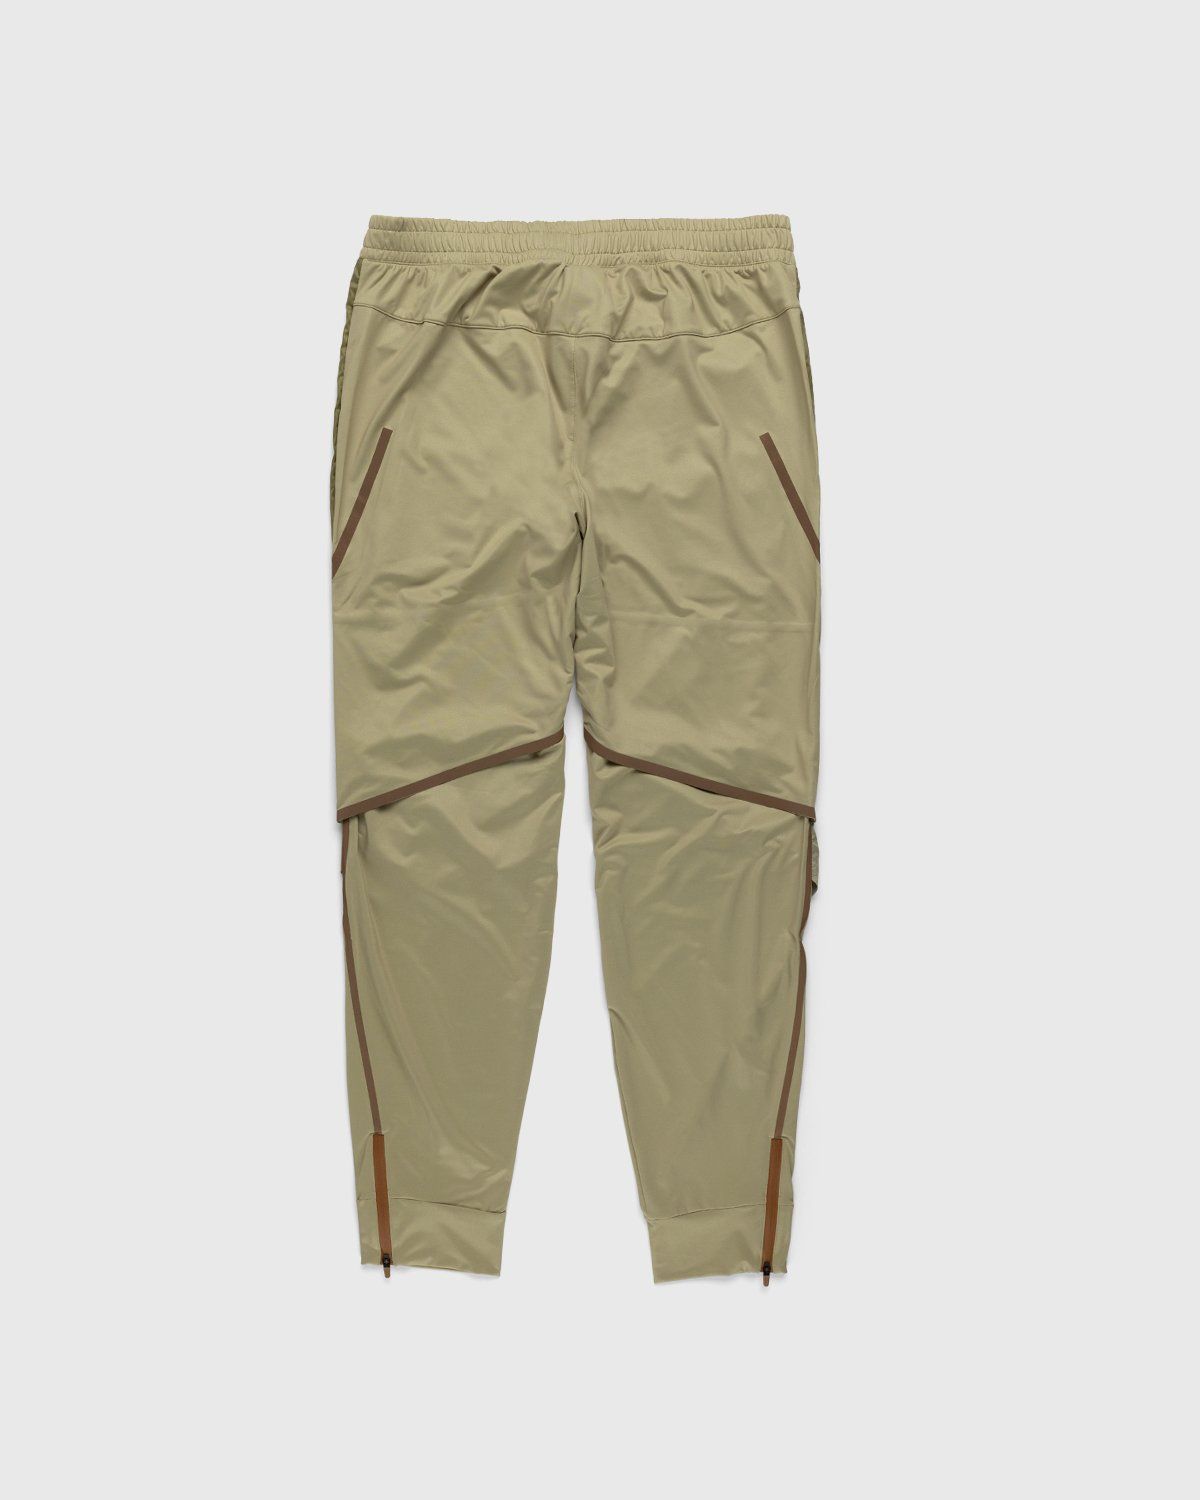 Loewe x On – Men's Technical Running Pants Gradient Khaki - Active Pants - Green - Image 2